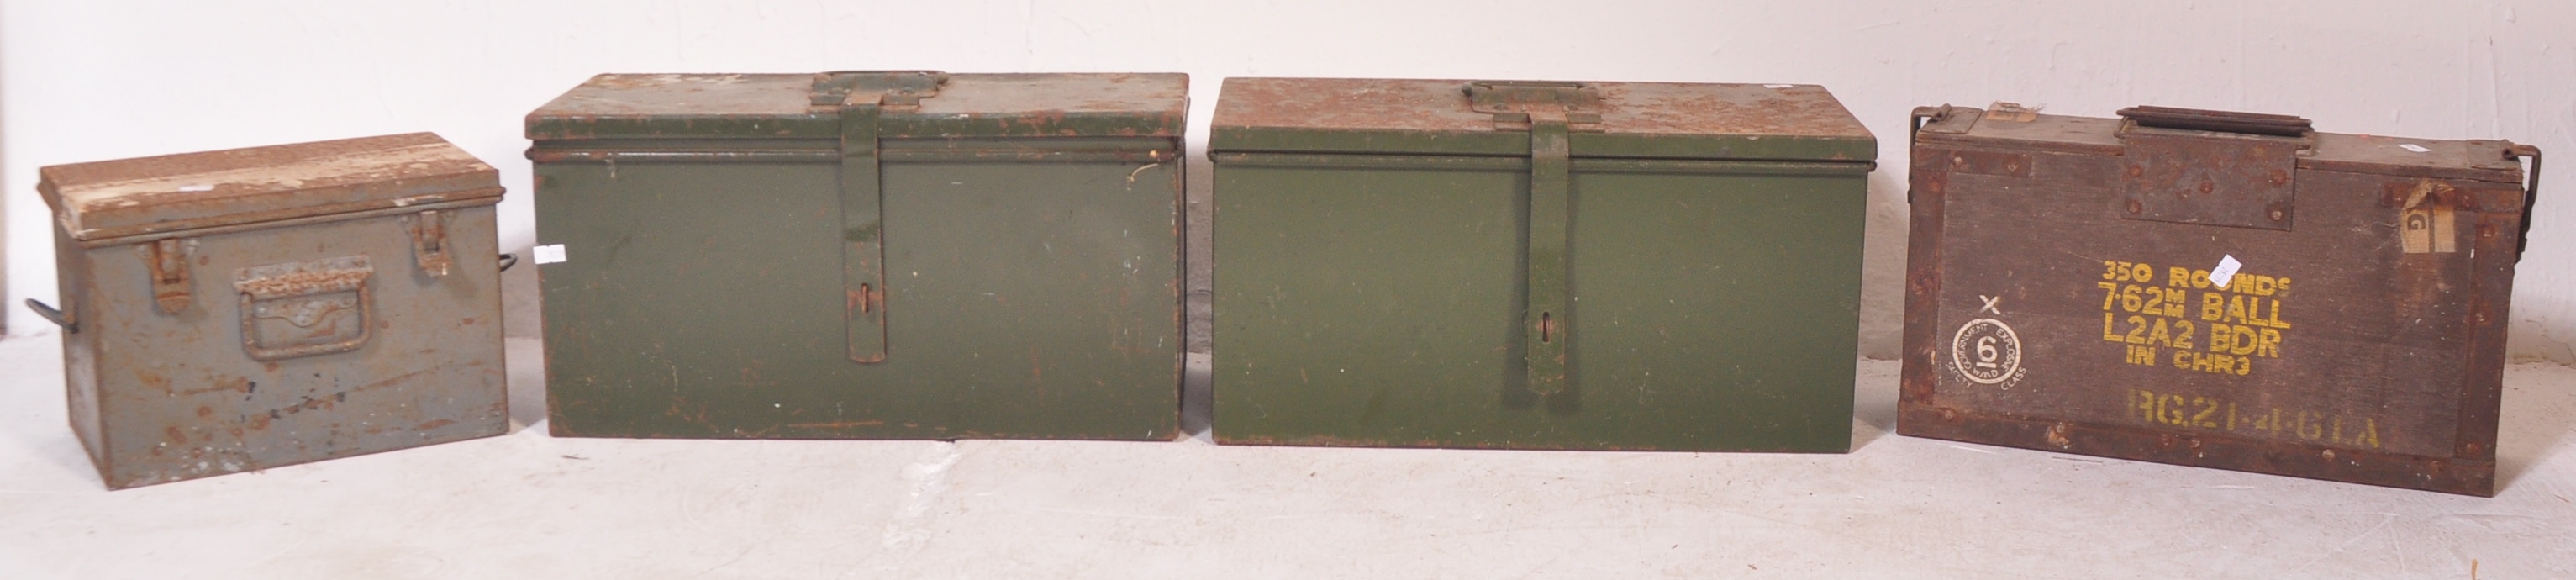 FOUR WORLD WAR II METAL AMMUNITION BOXES